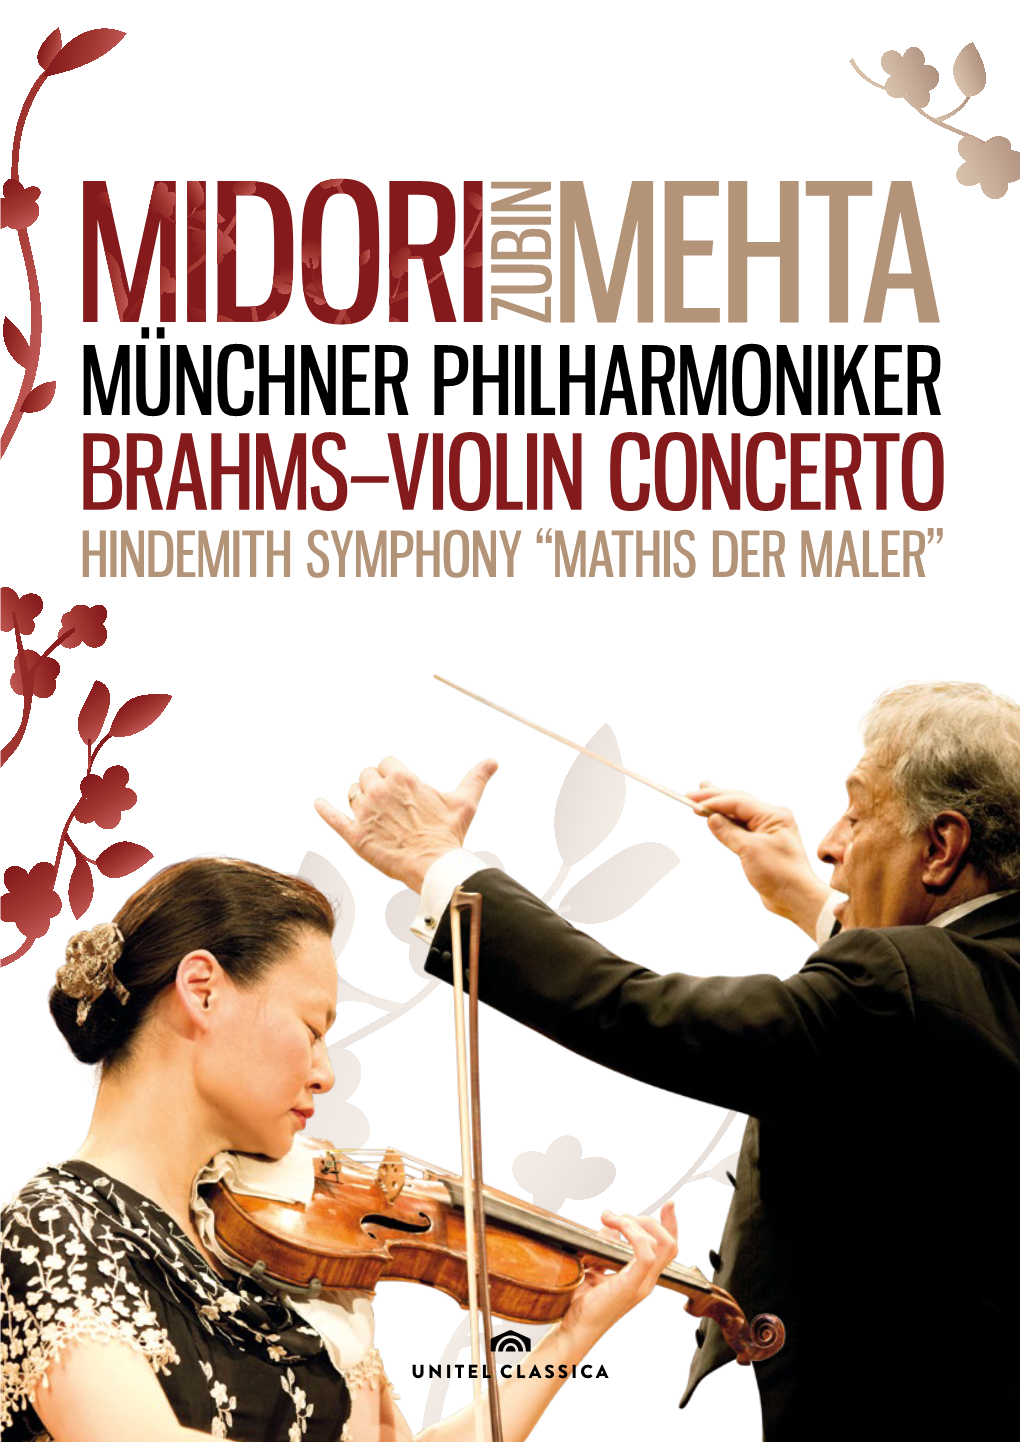 Brahms–Violin Concerto Hindemith Symphony “Mathis Der Maler” B in Zu MEHTA